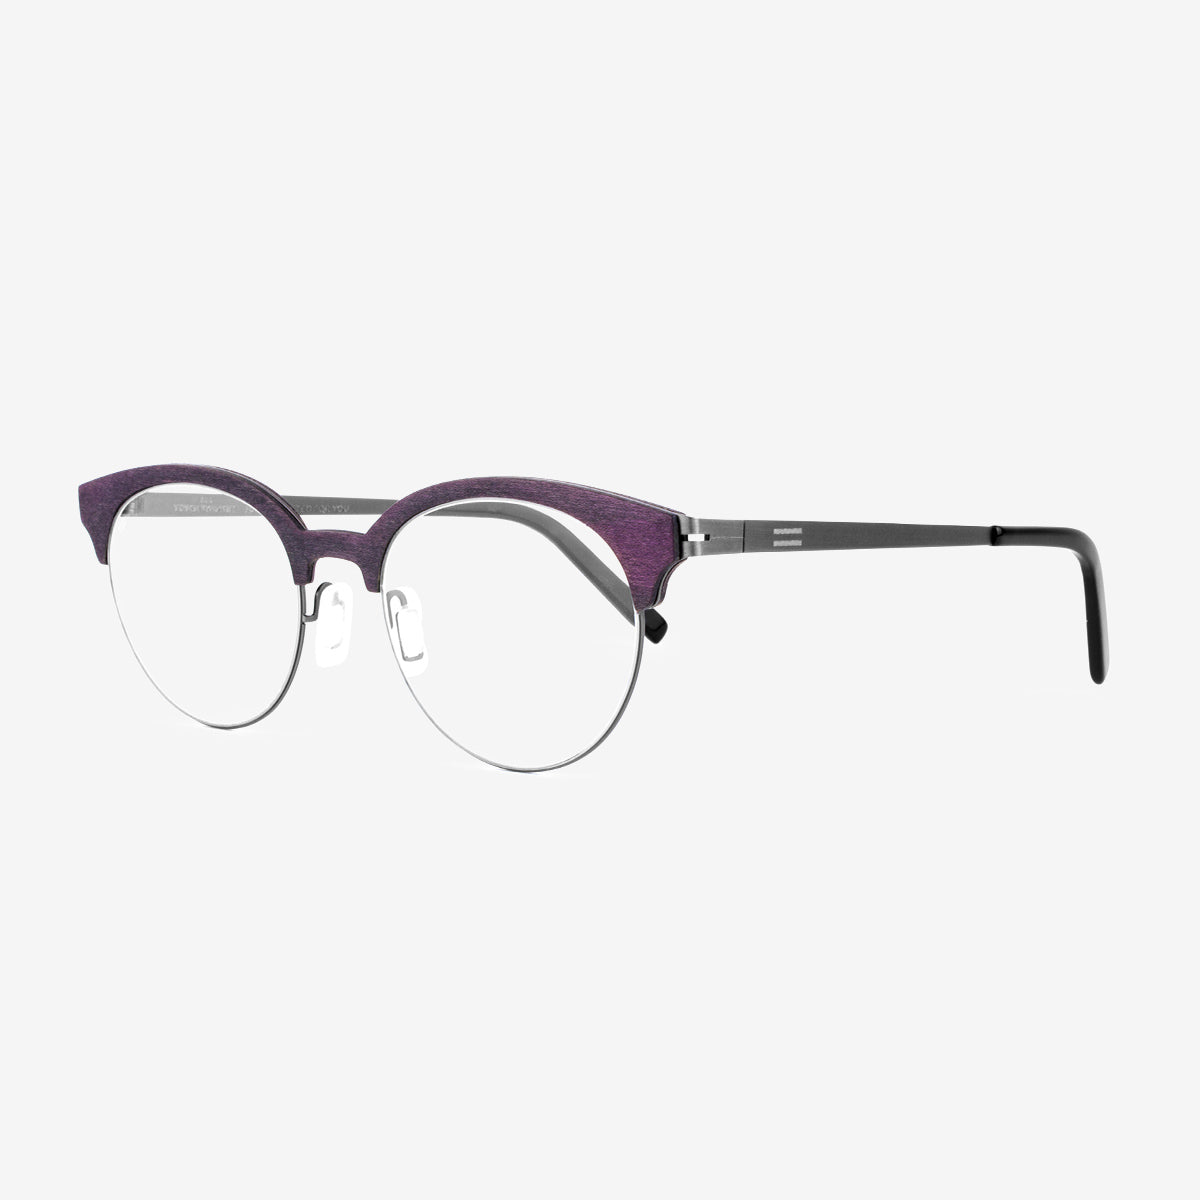 Lightweight purple wood and metal eyeglass frames